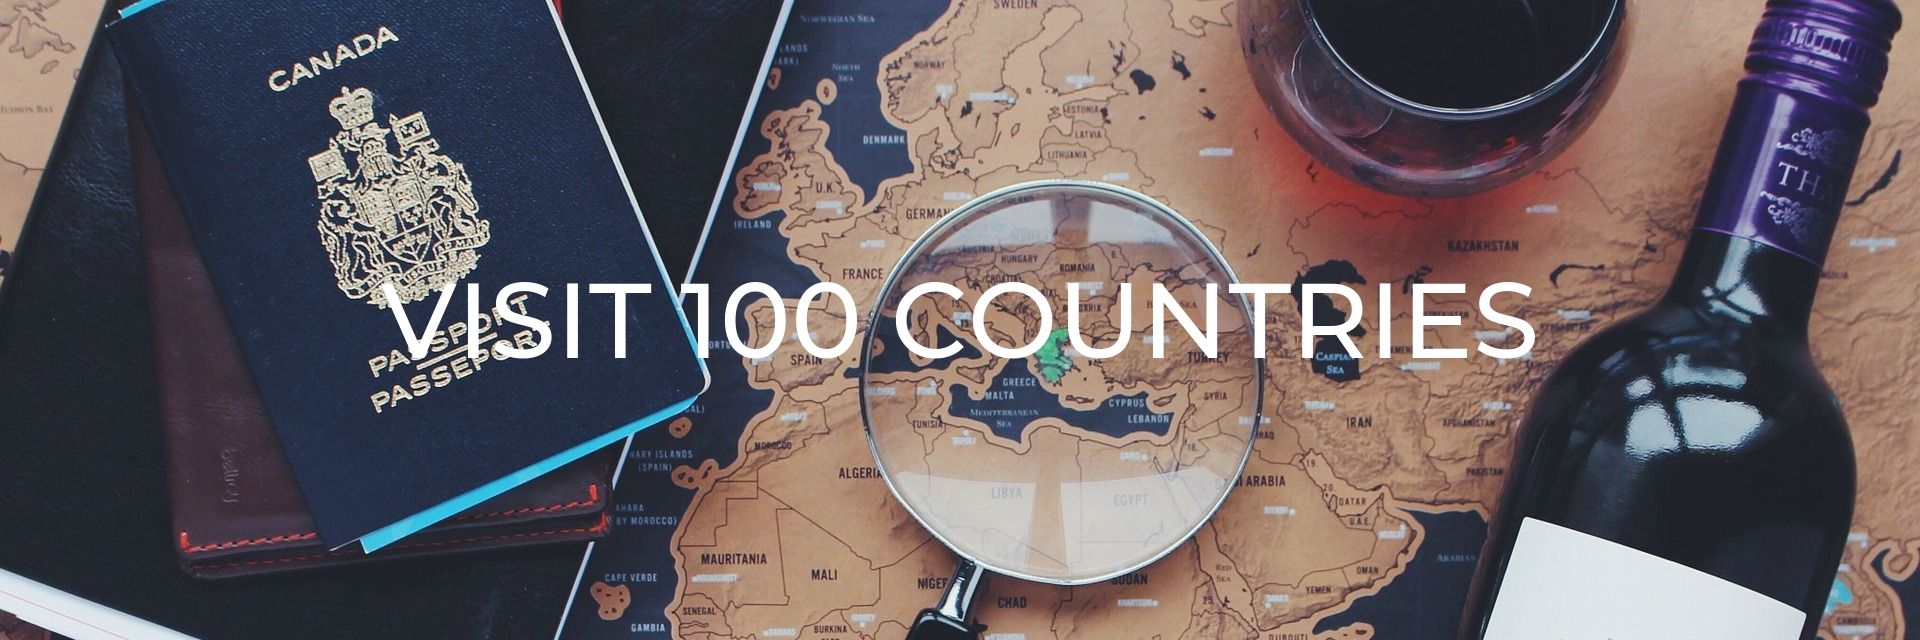 Visit 100 Countries Mobile Header